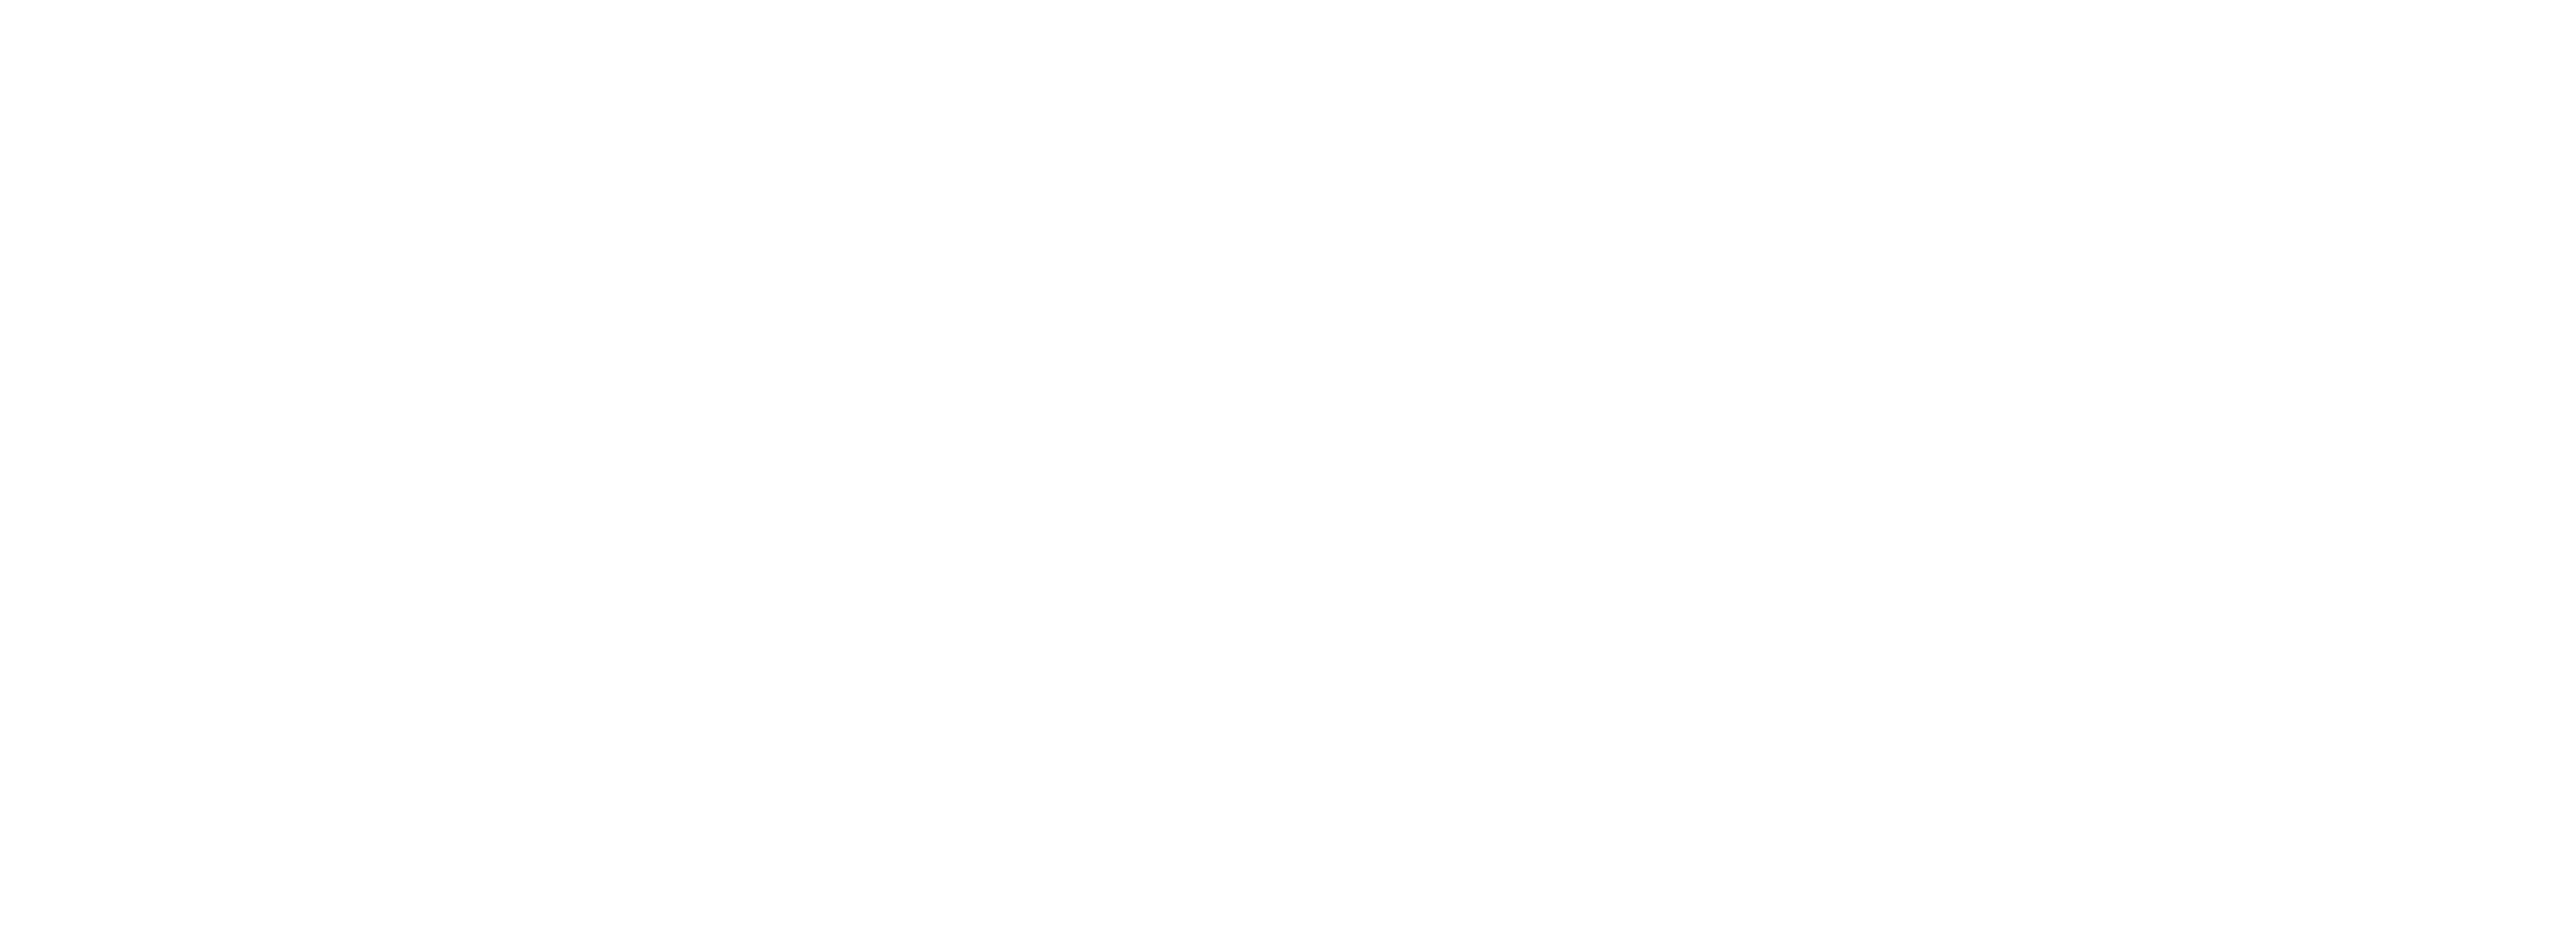 DownsLink Challenge Logo-01